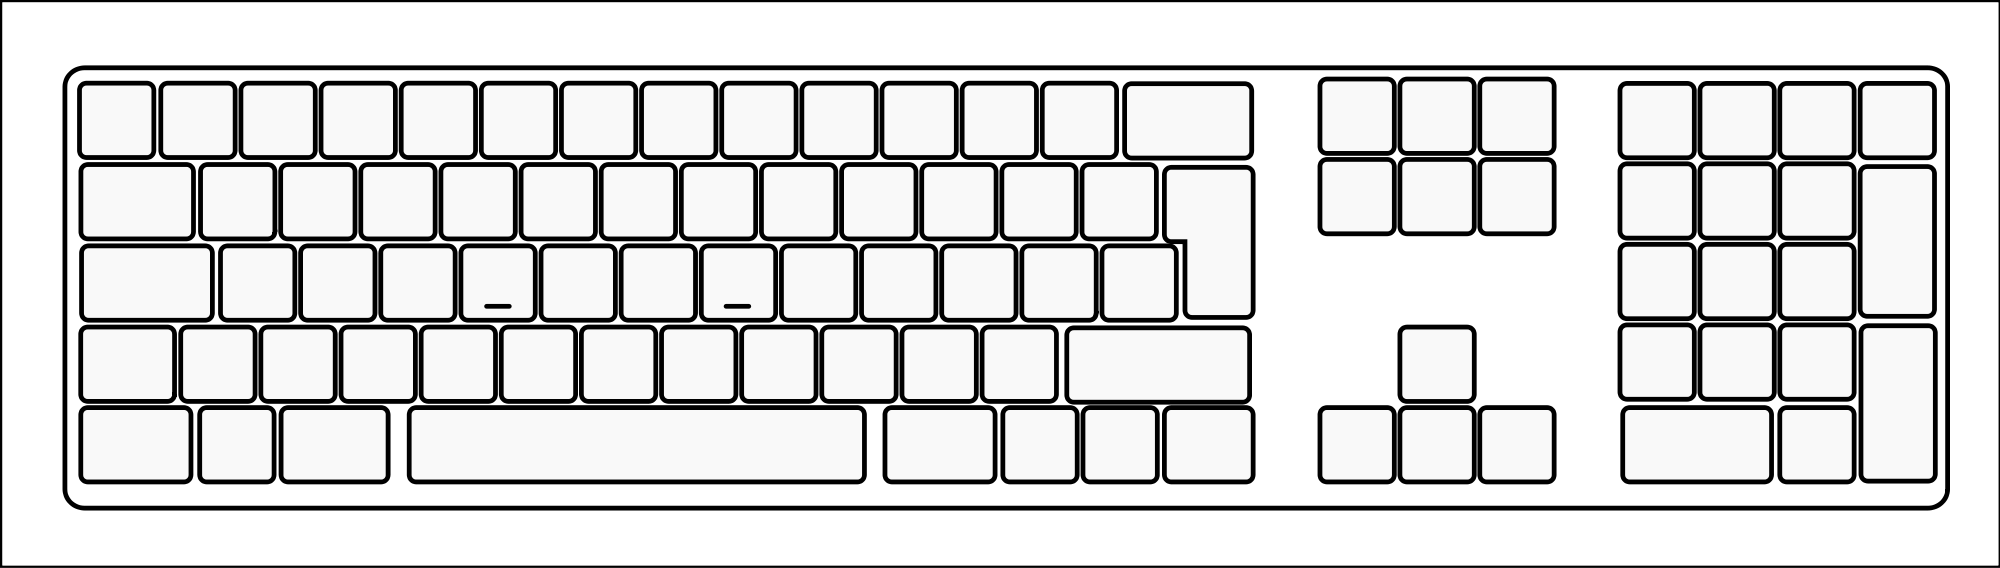 grade-2-keyboarding-home-row-crazy4computers